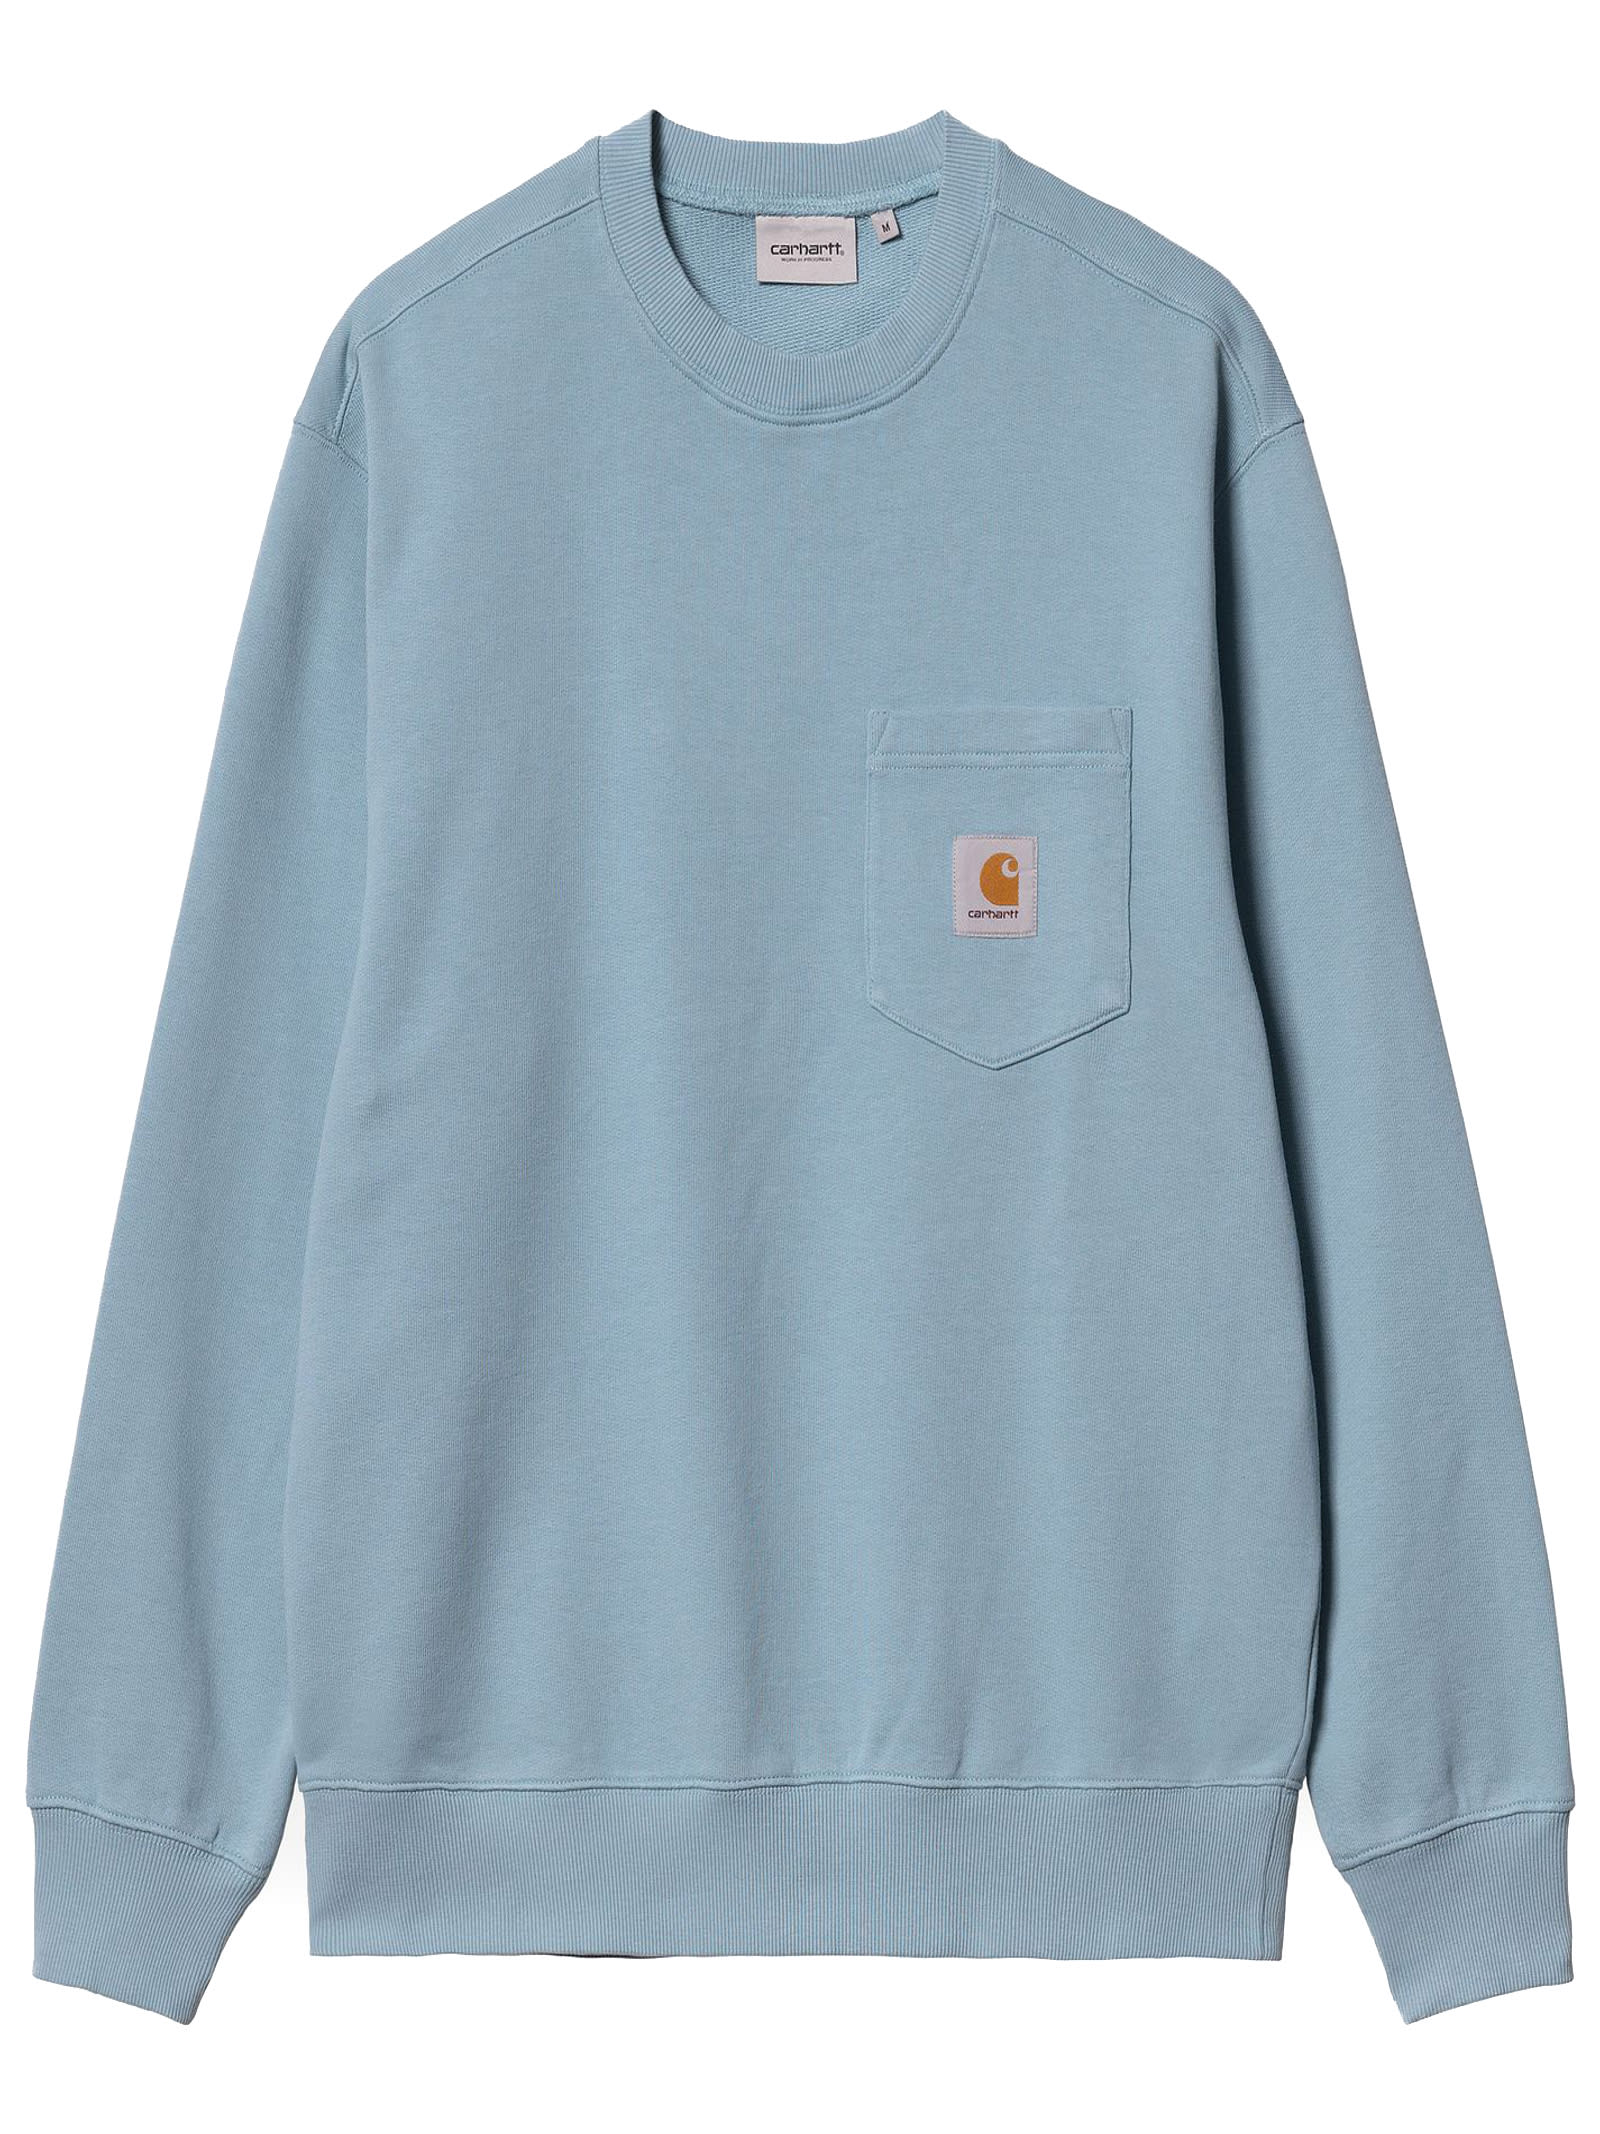 Carhartt Light Blue Cotton Sweatshirt